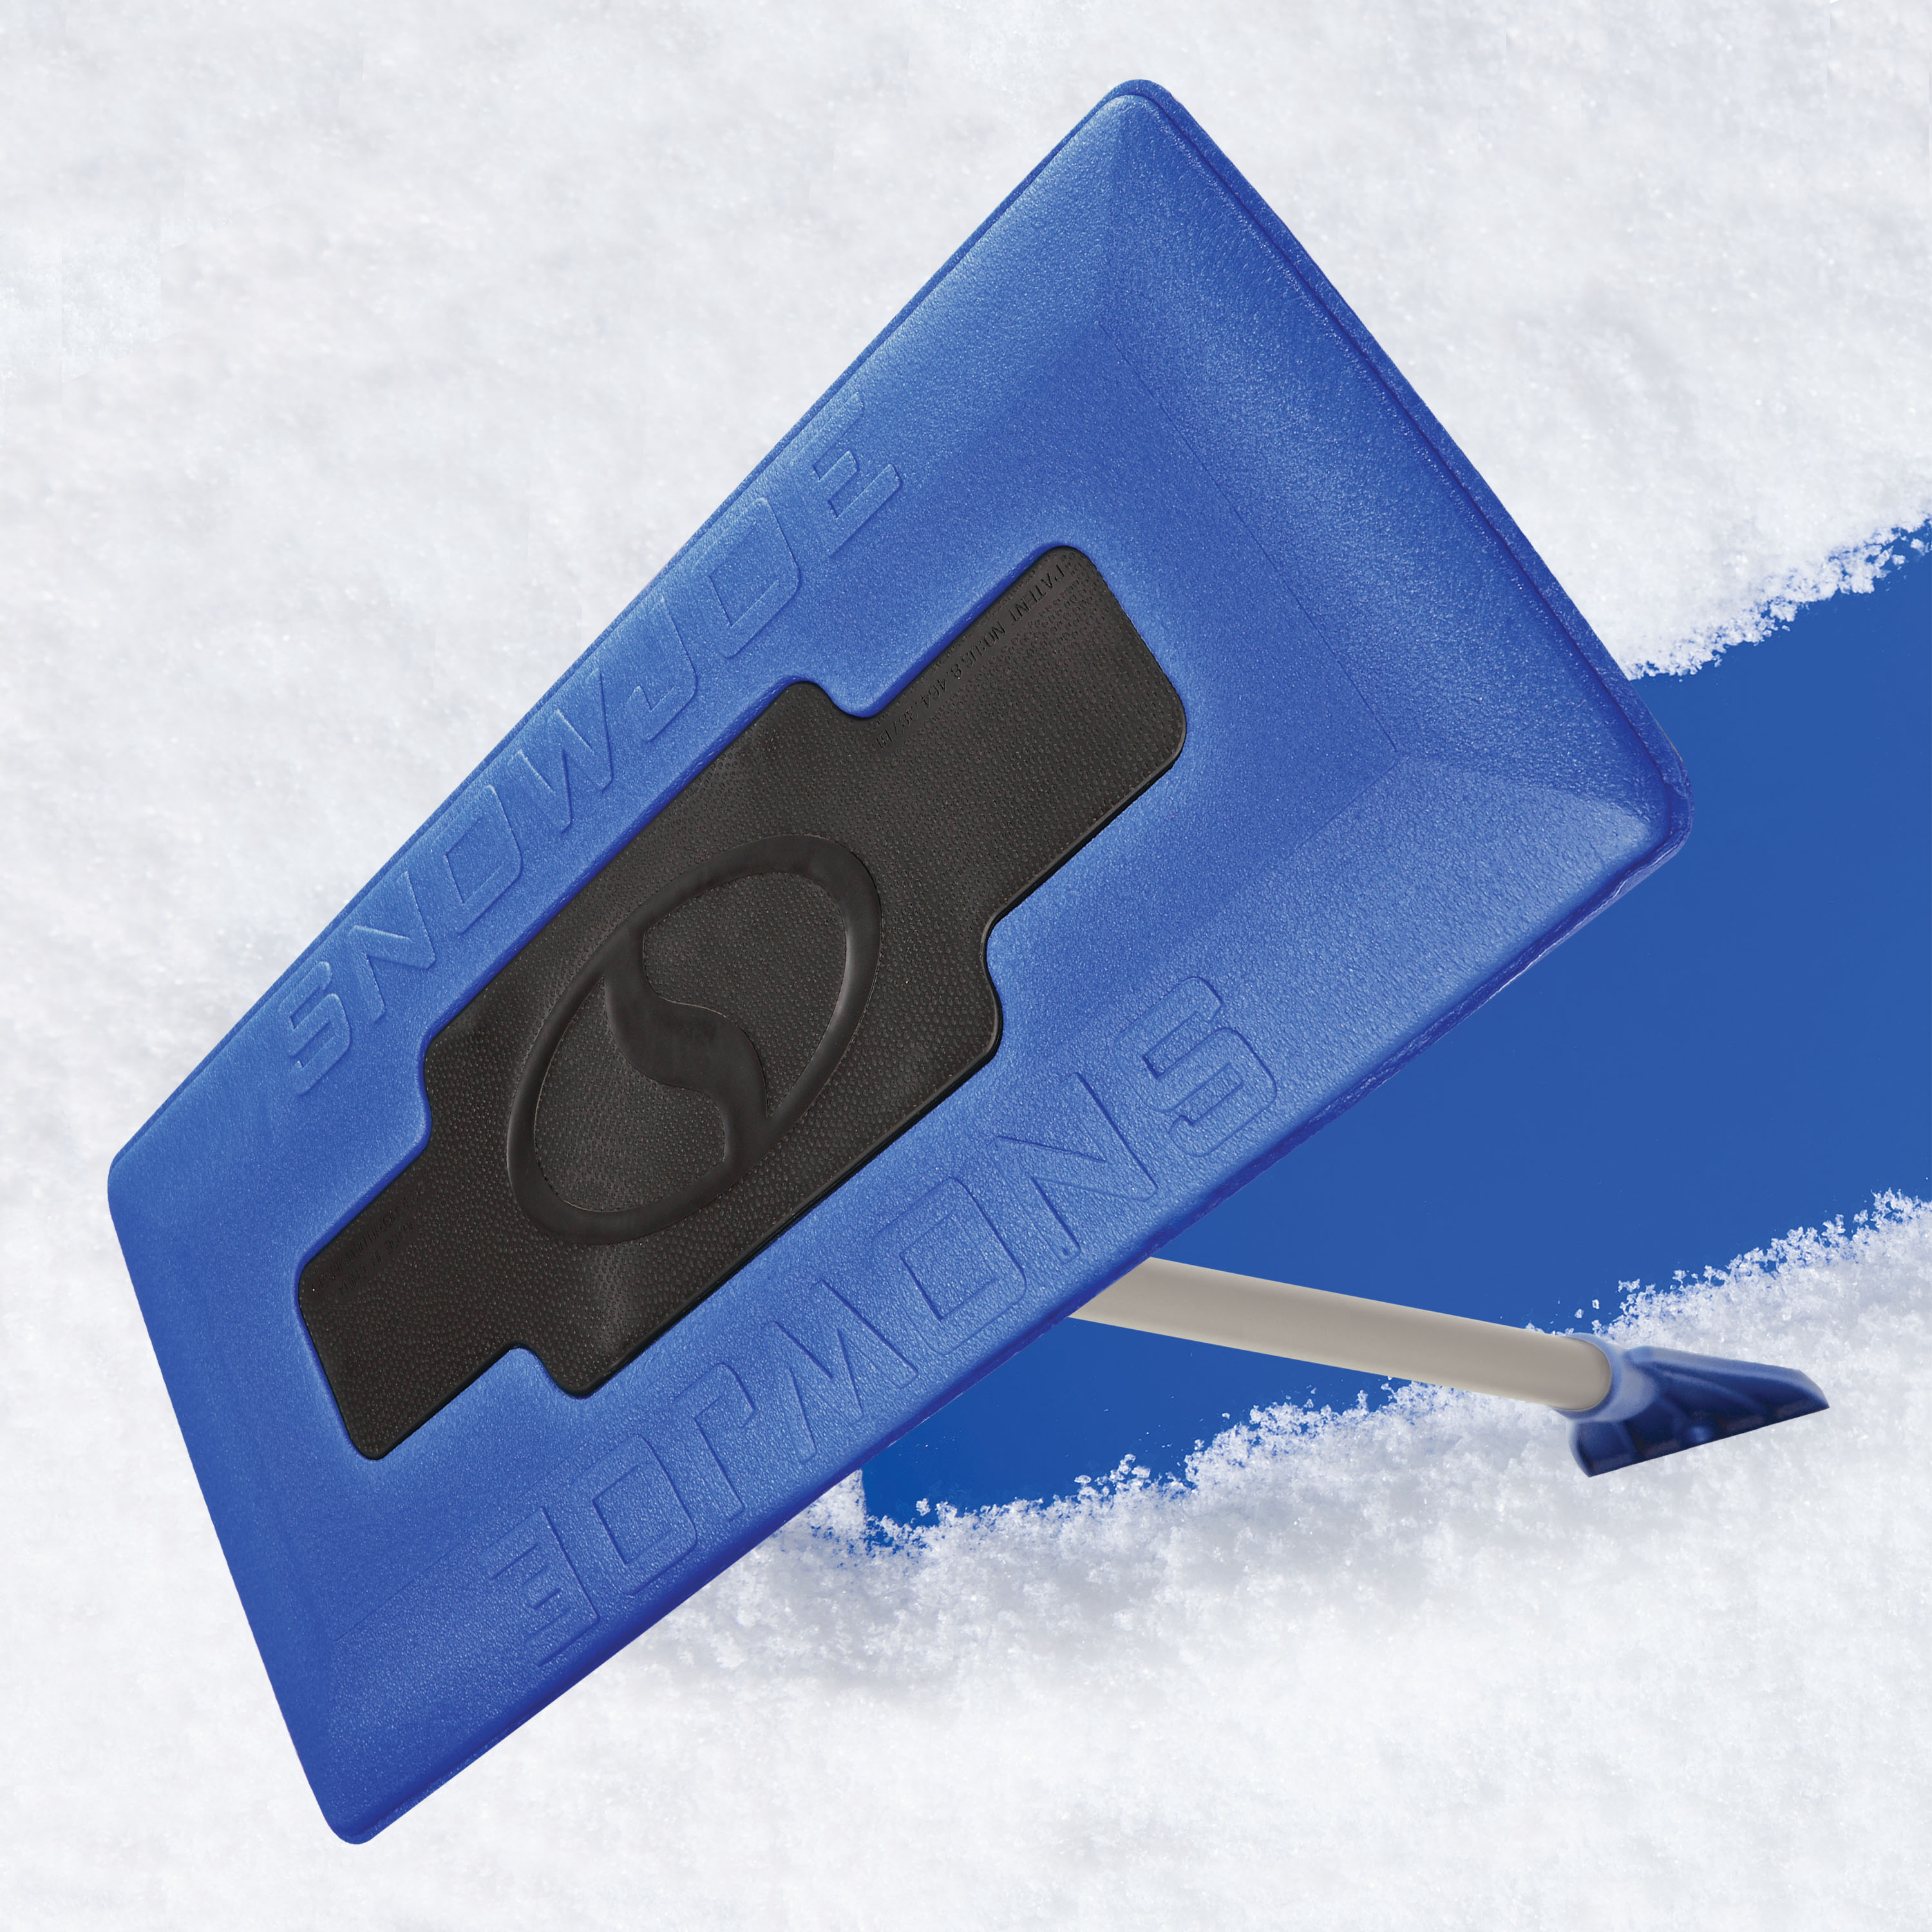 Chanurae Car Ice Scraper with Broom 3-in-1 Ice Scraper Snow Brush, 360°  Rotating Snow Brush with Non-Slip Foam Handle, Removable Retractable Long  Snow